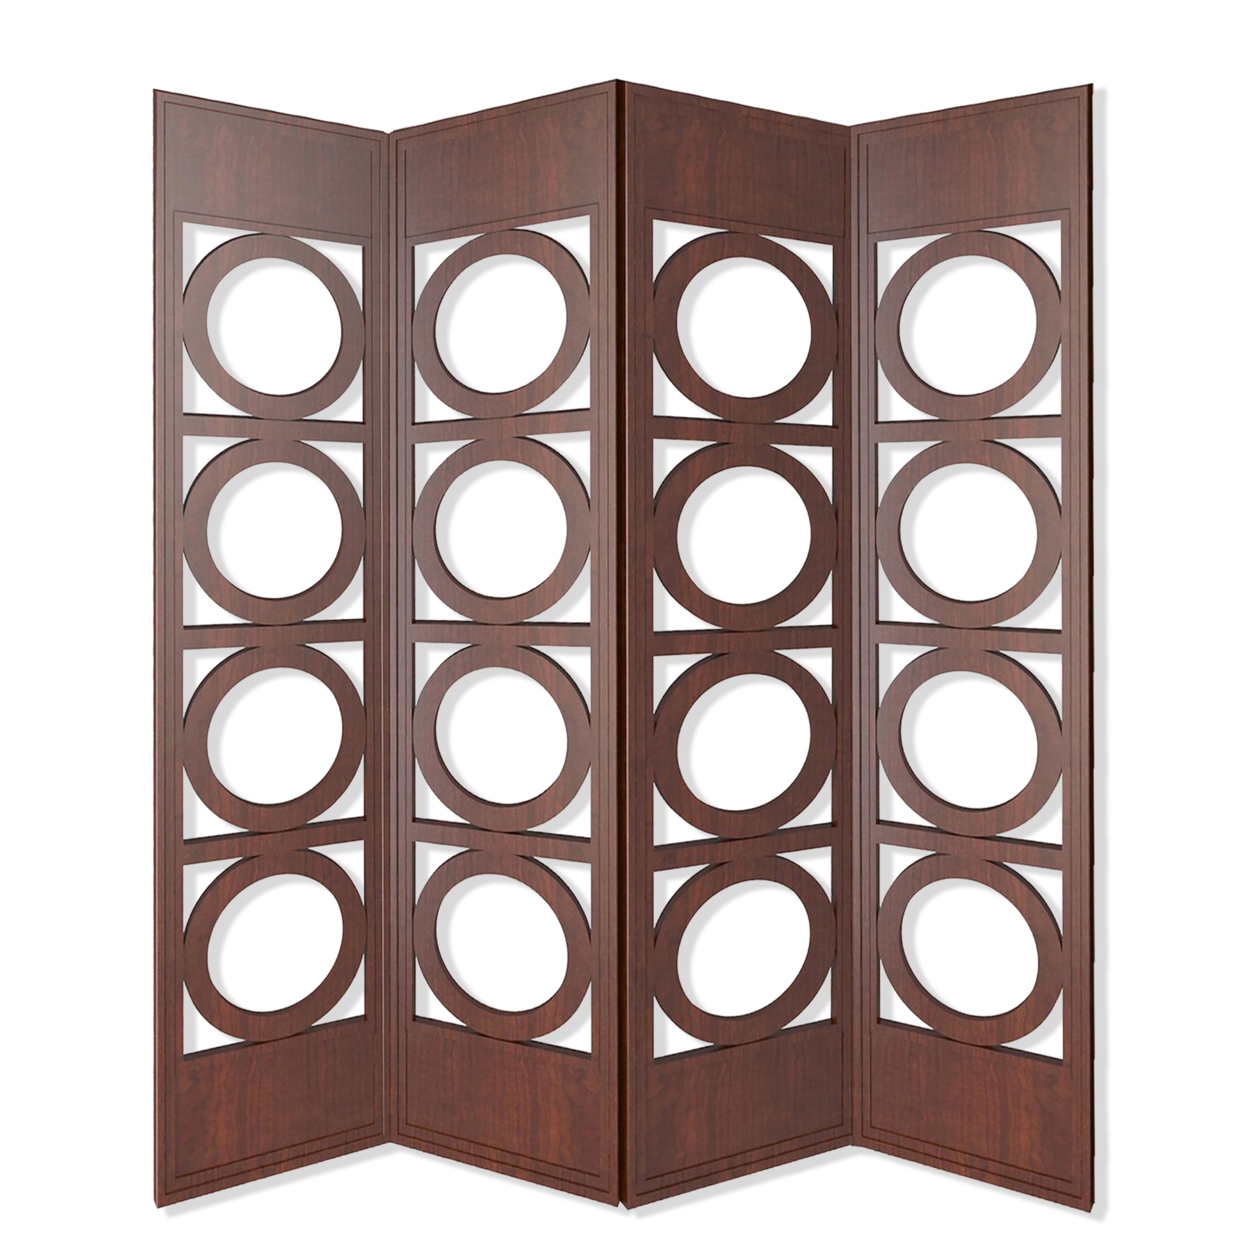 Transitional 4 Panel Wood Screen With Abstract Circular Design, Brown- Saltoro Sherpi